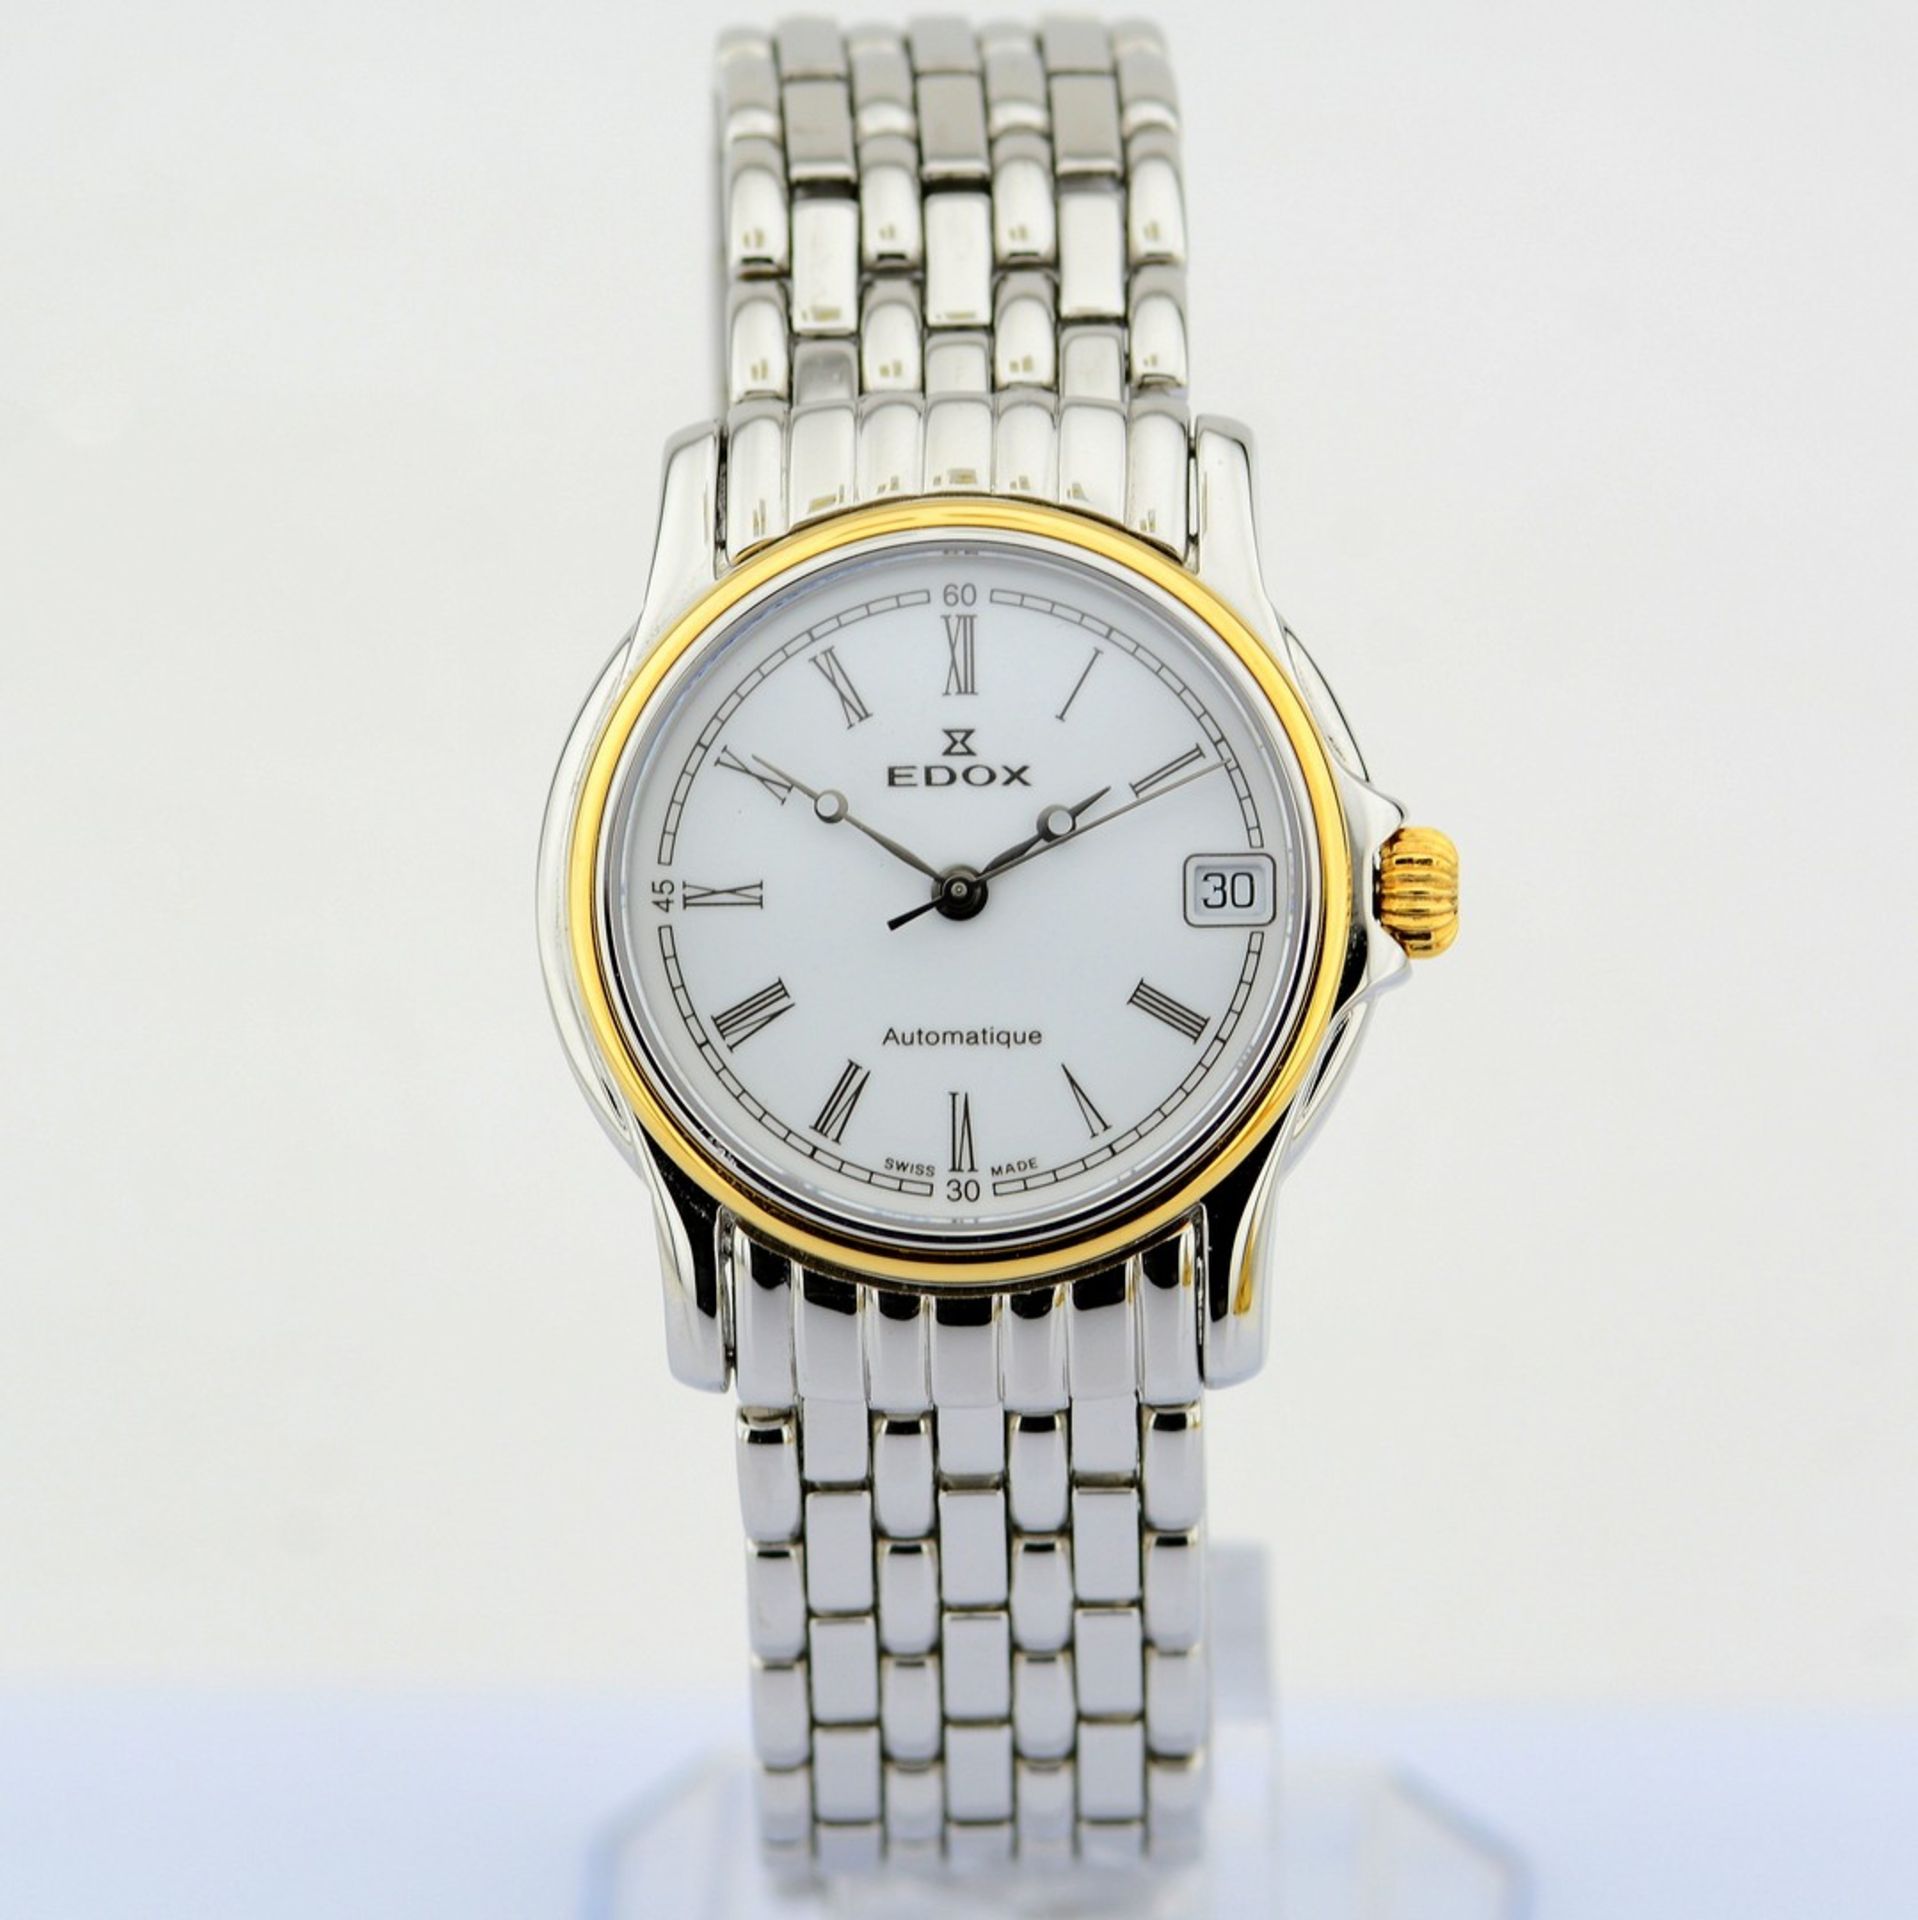 Edox / Automatic Date - Gentlemen's Gold/Steel Wristwatch - Image 3 of 5